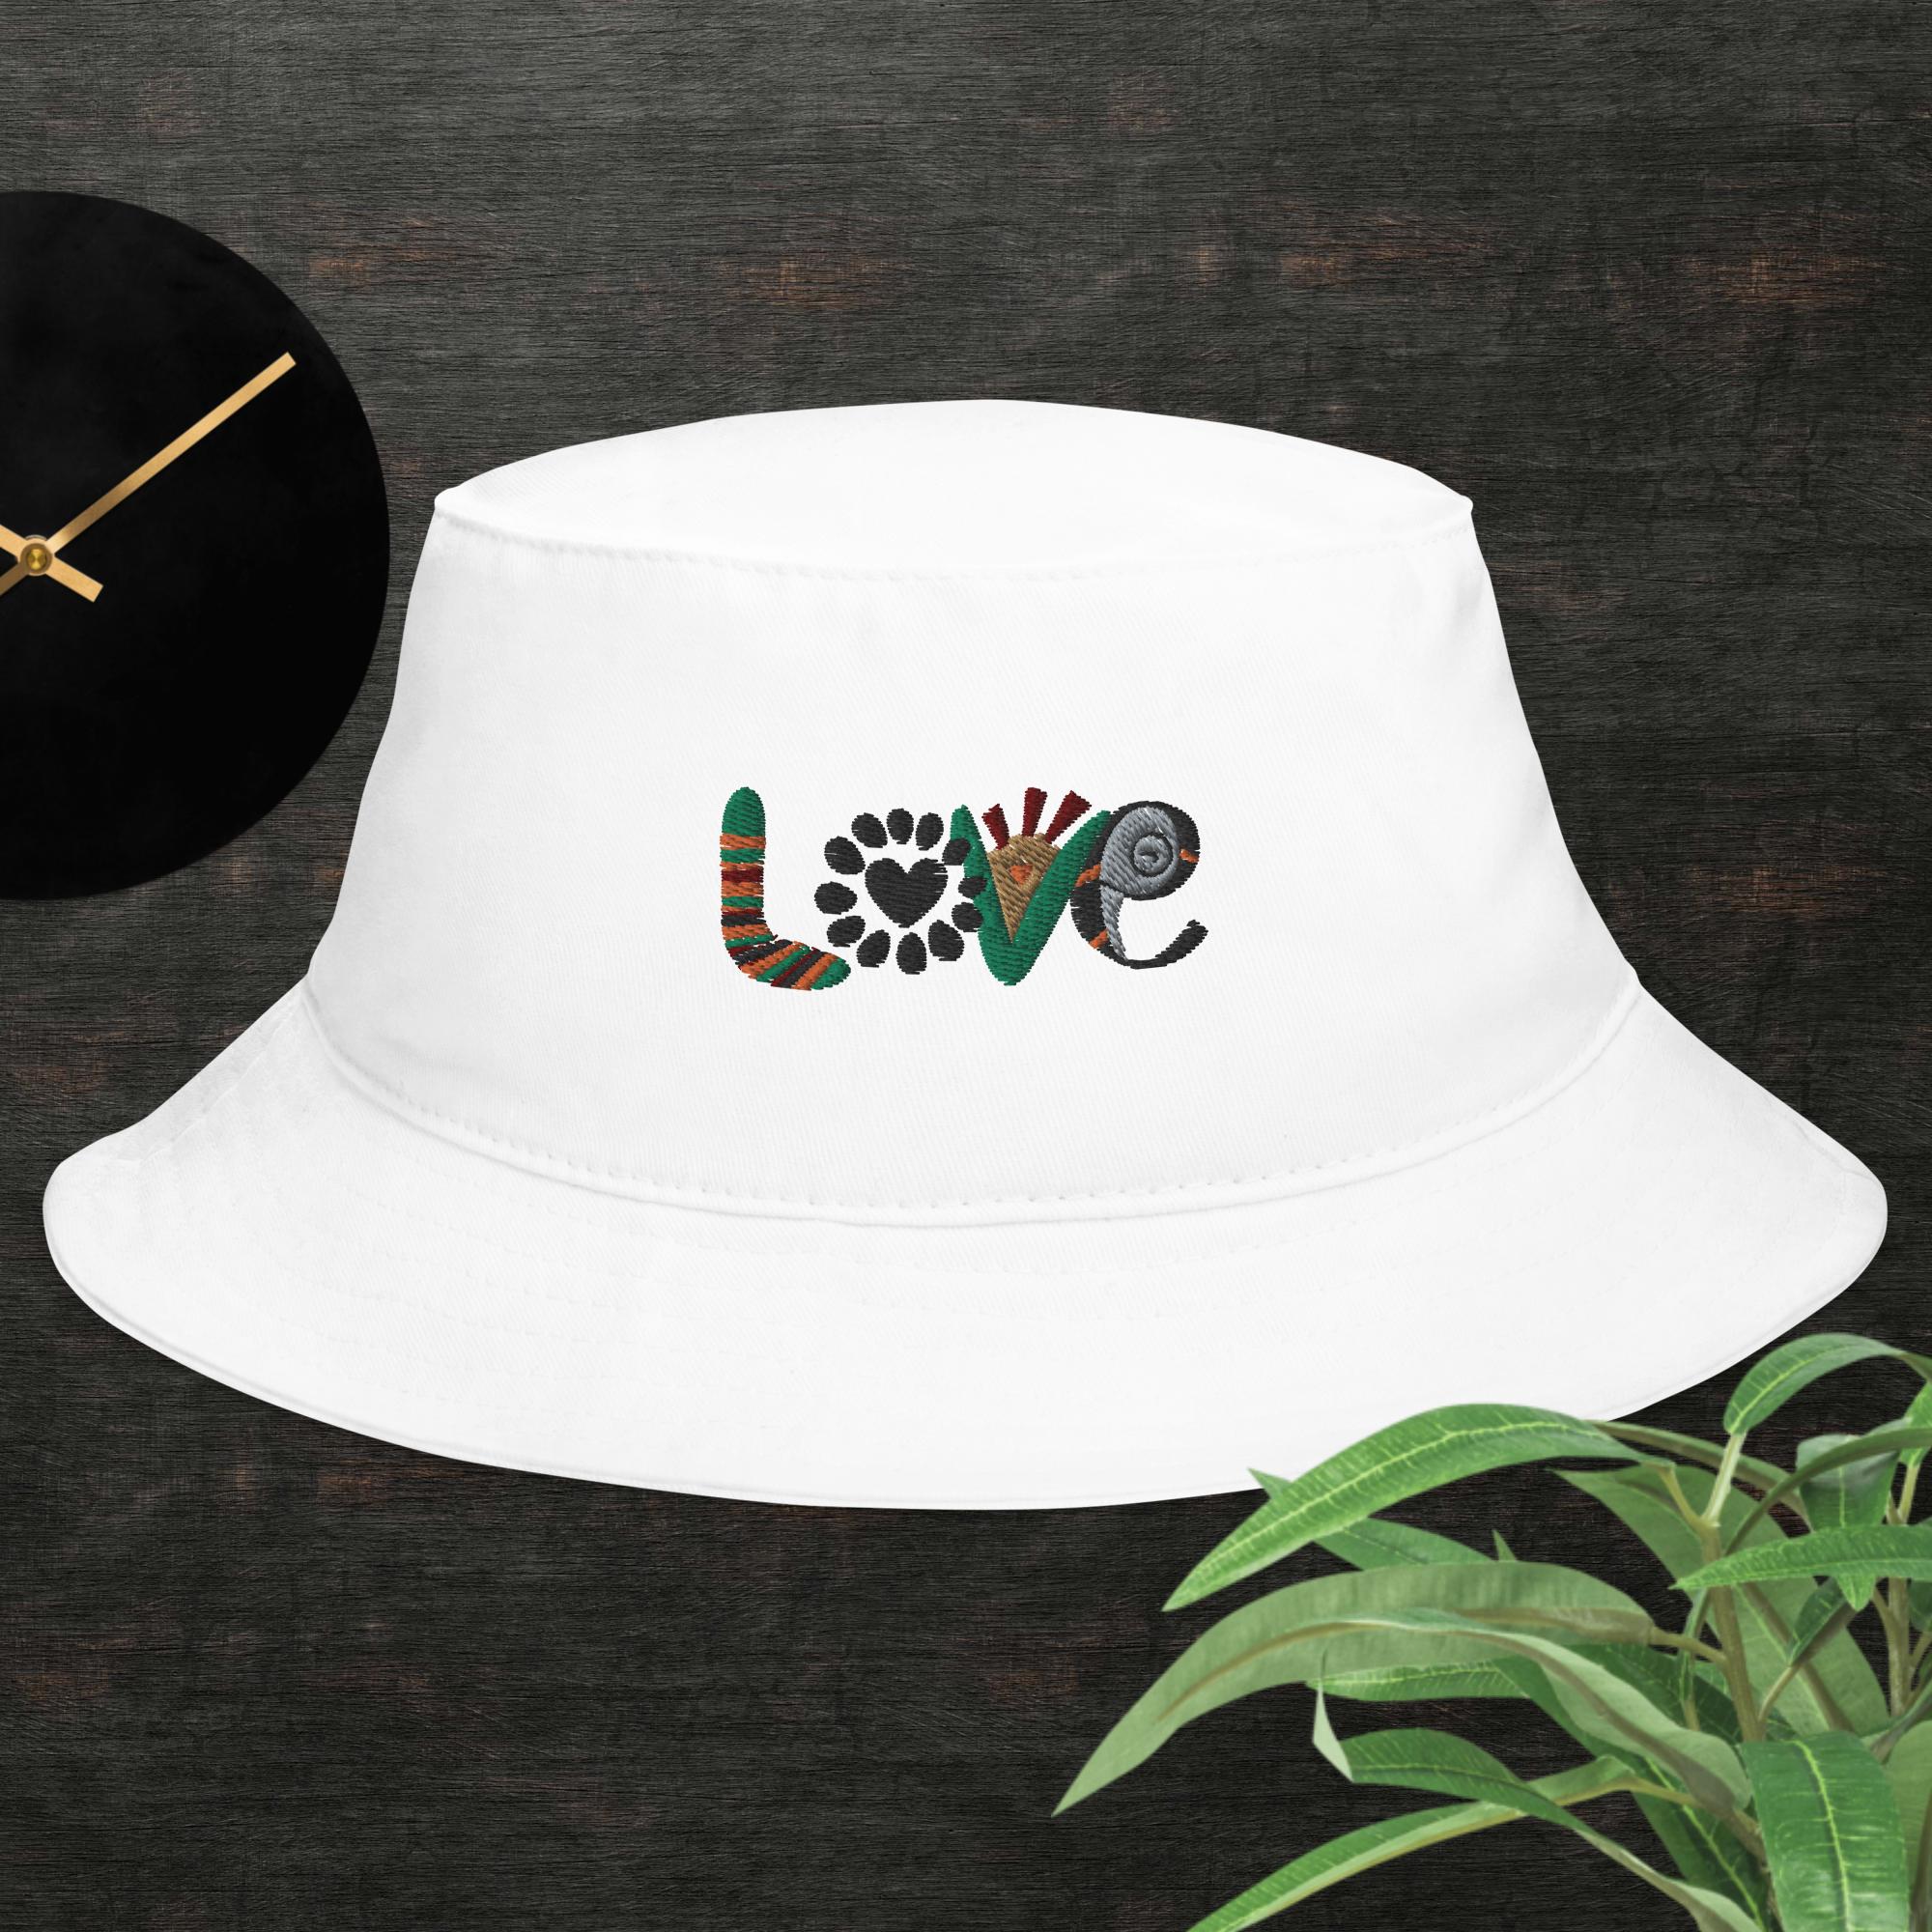 "Love" Bucket Hat